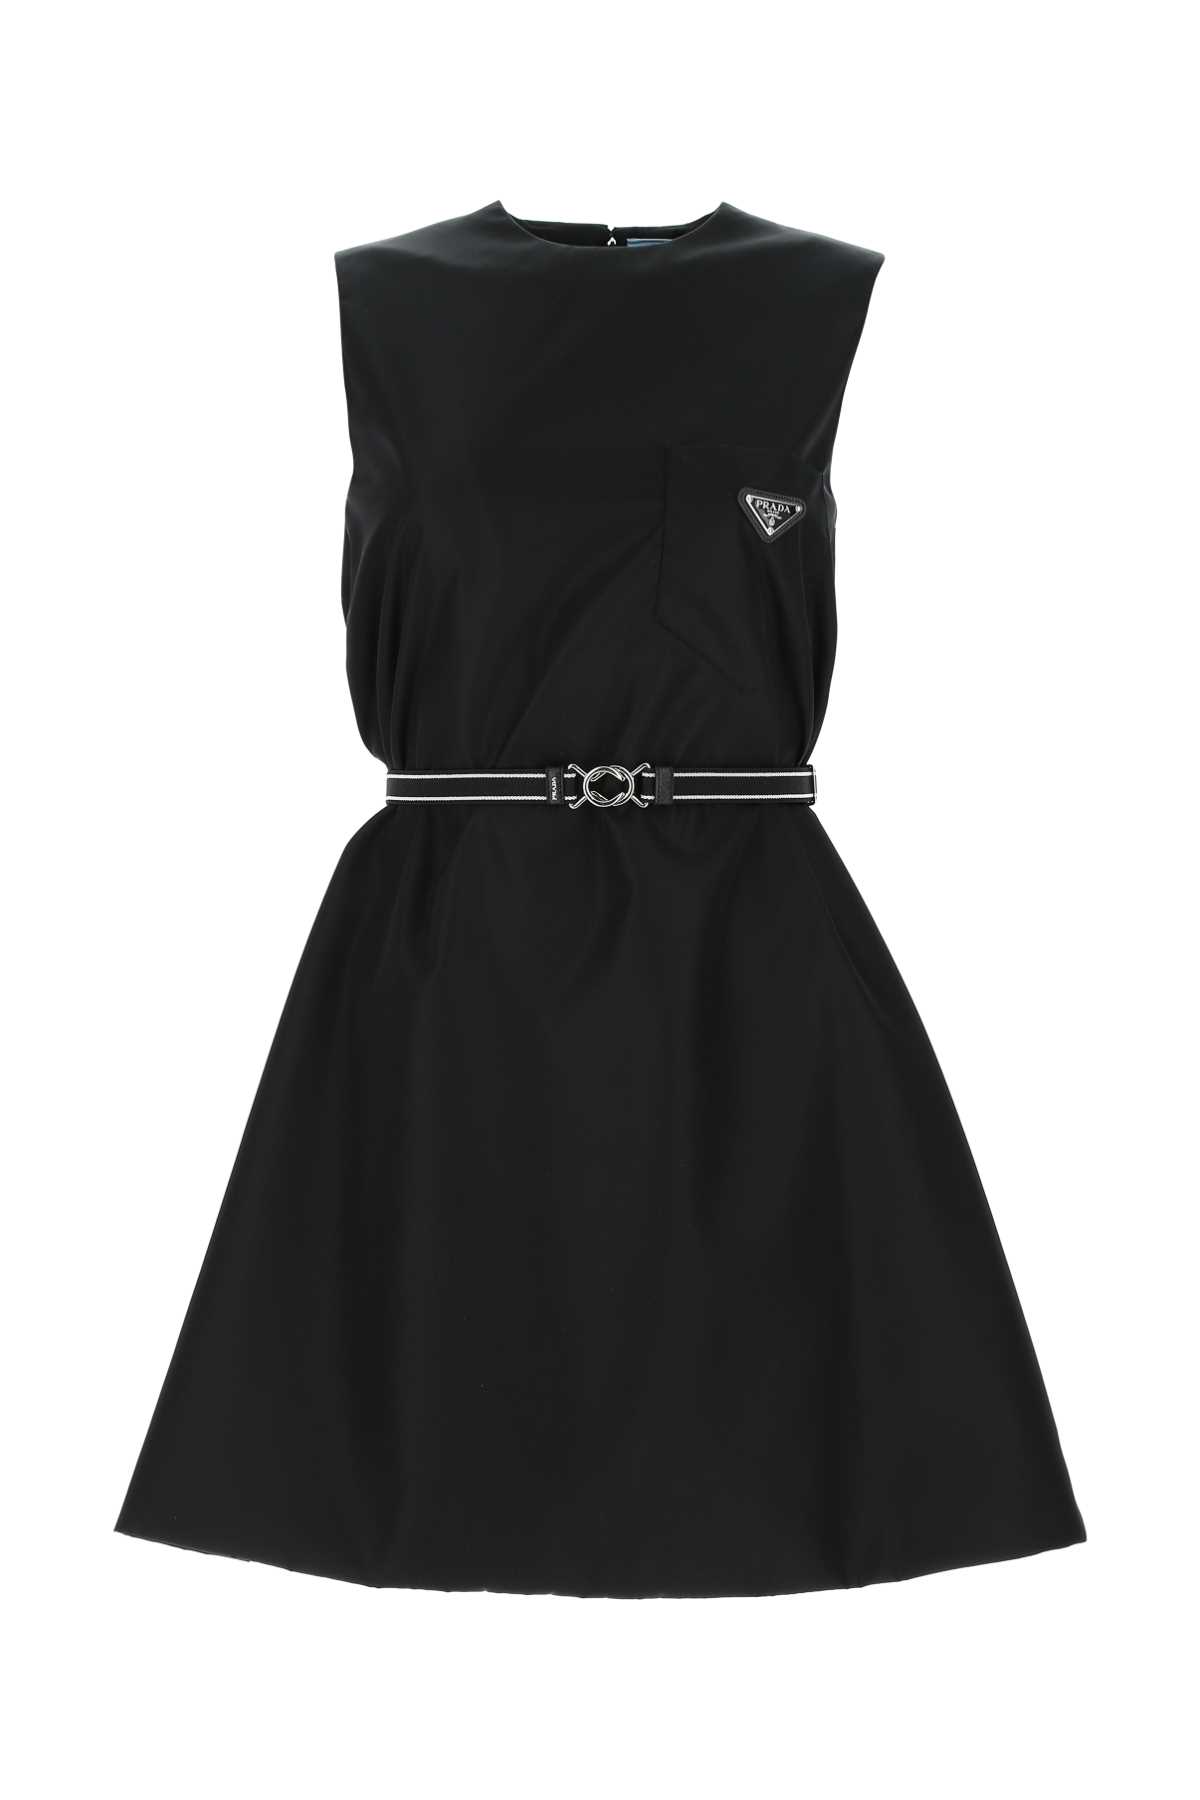 Prada Black Nylon Dress